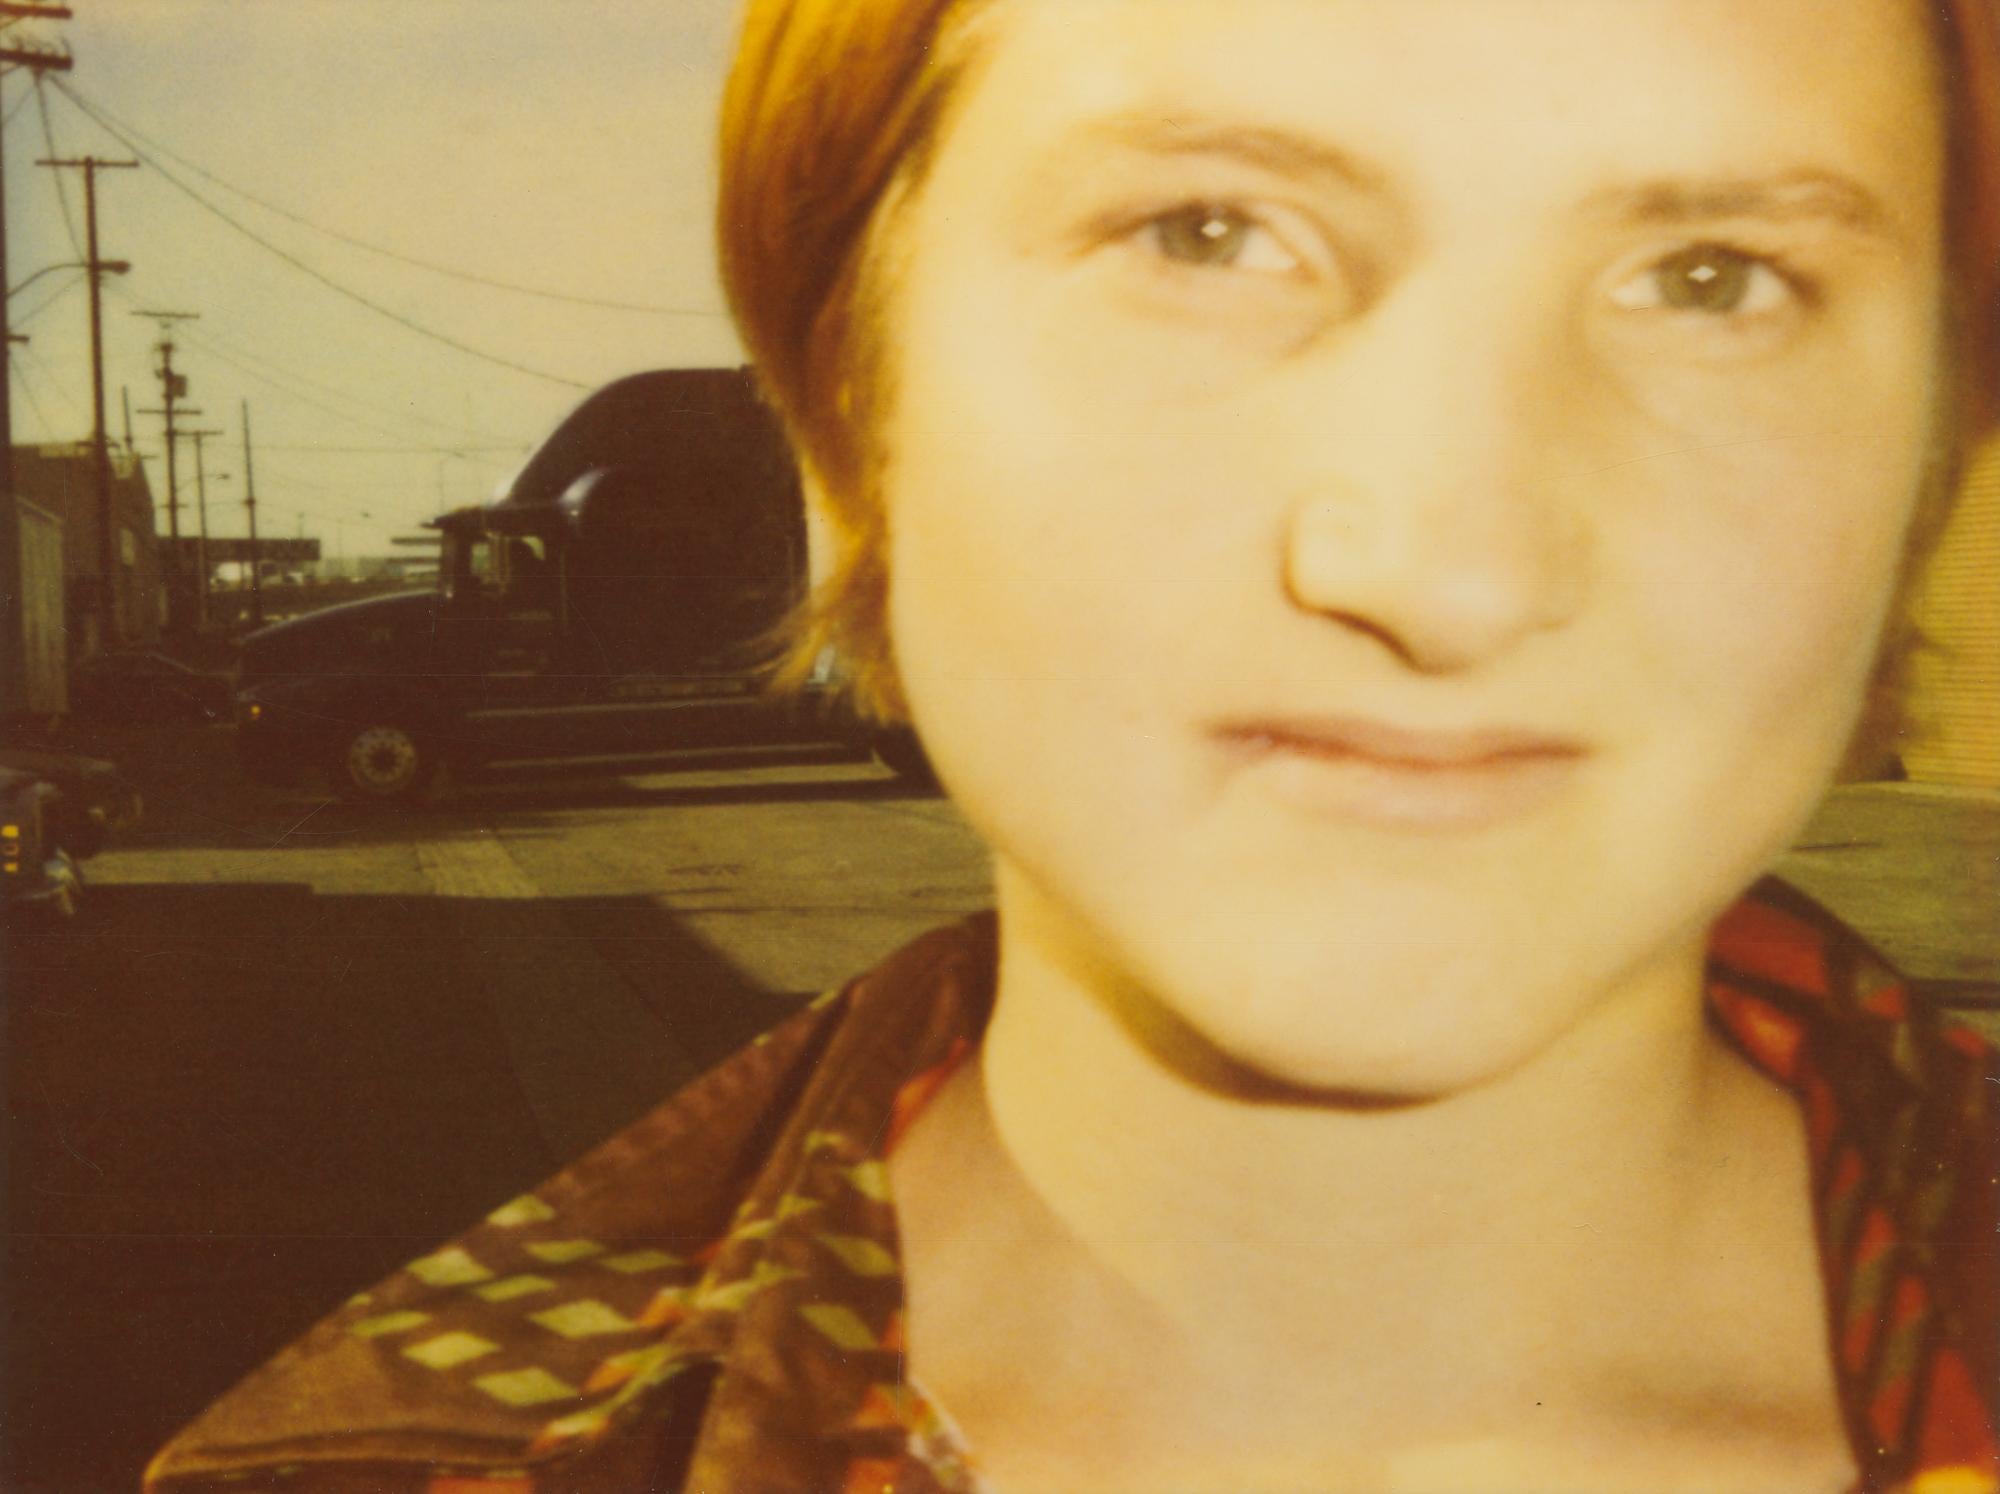 Stefanie Schneider Portrait Photograph - Kirsten in front of Charlie's house (California Blue Screen) - analog